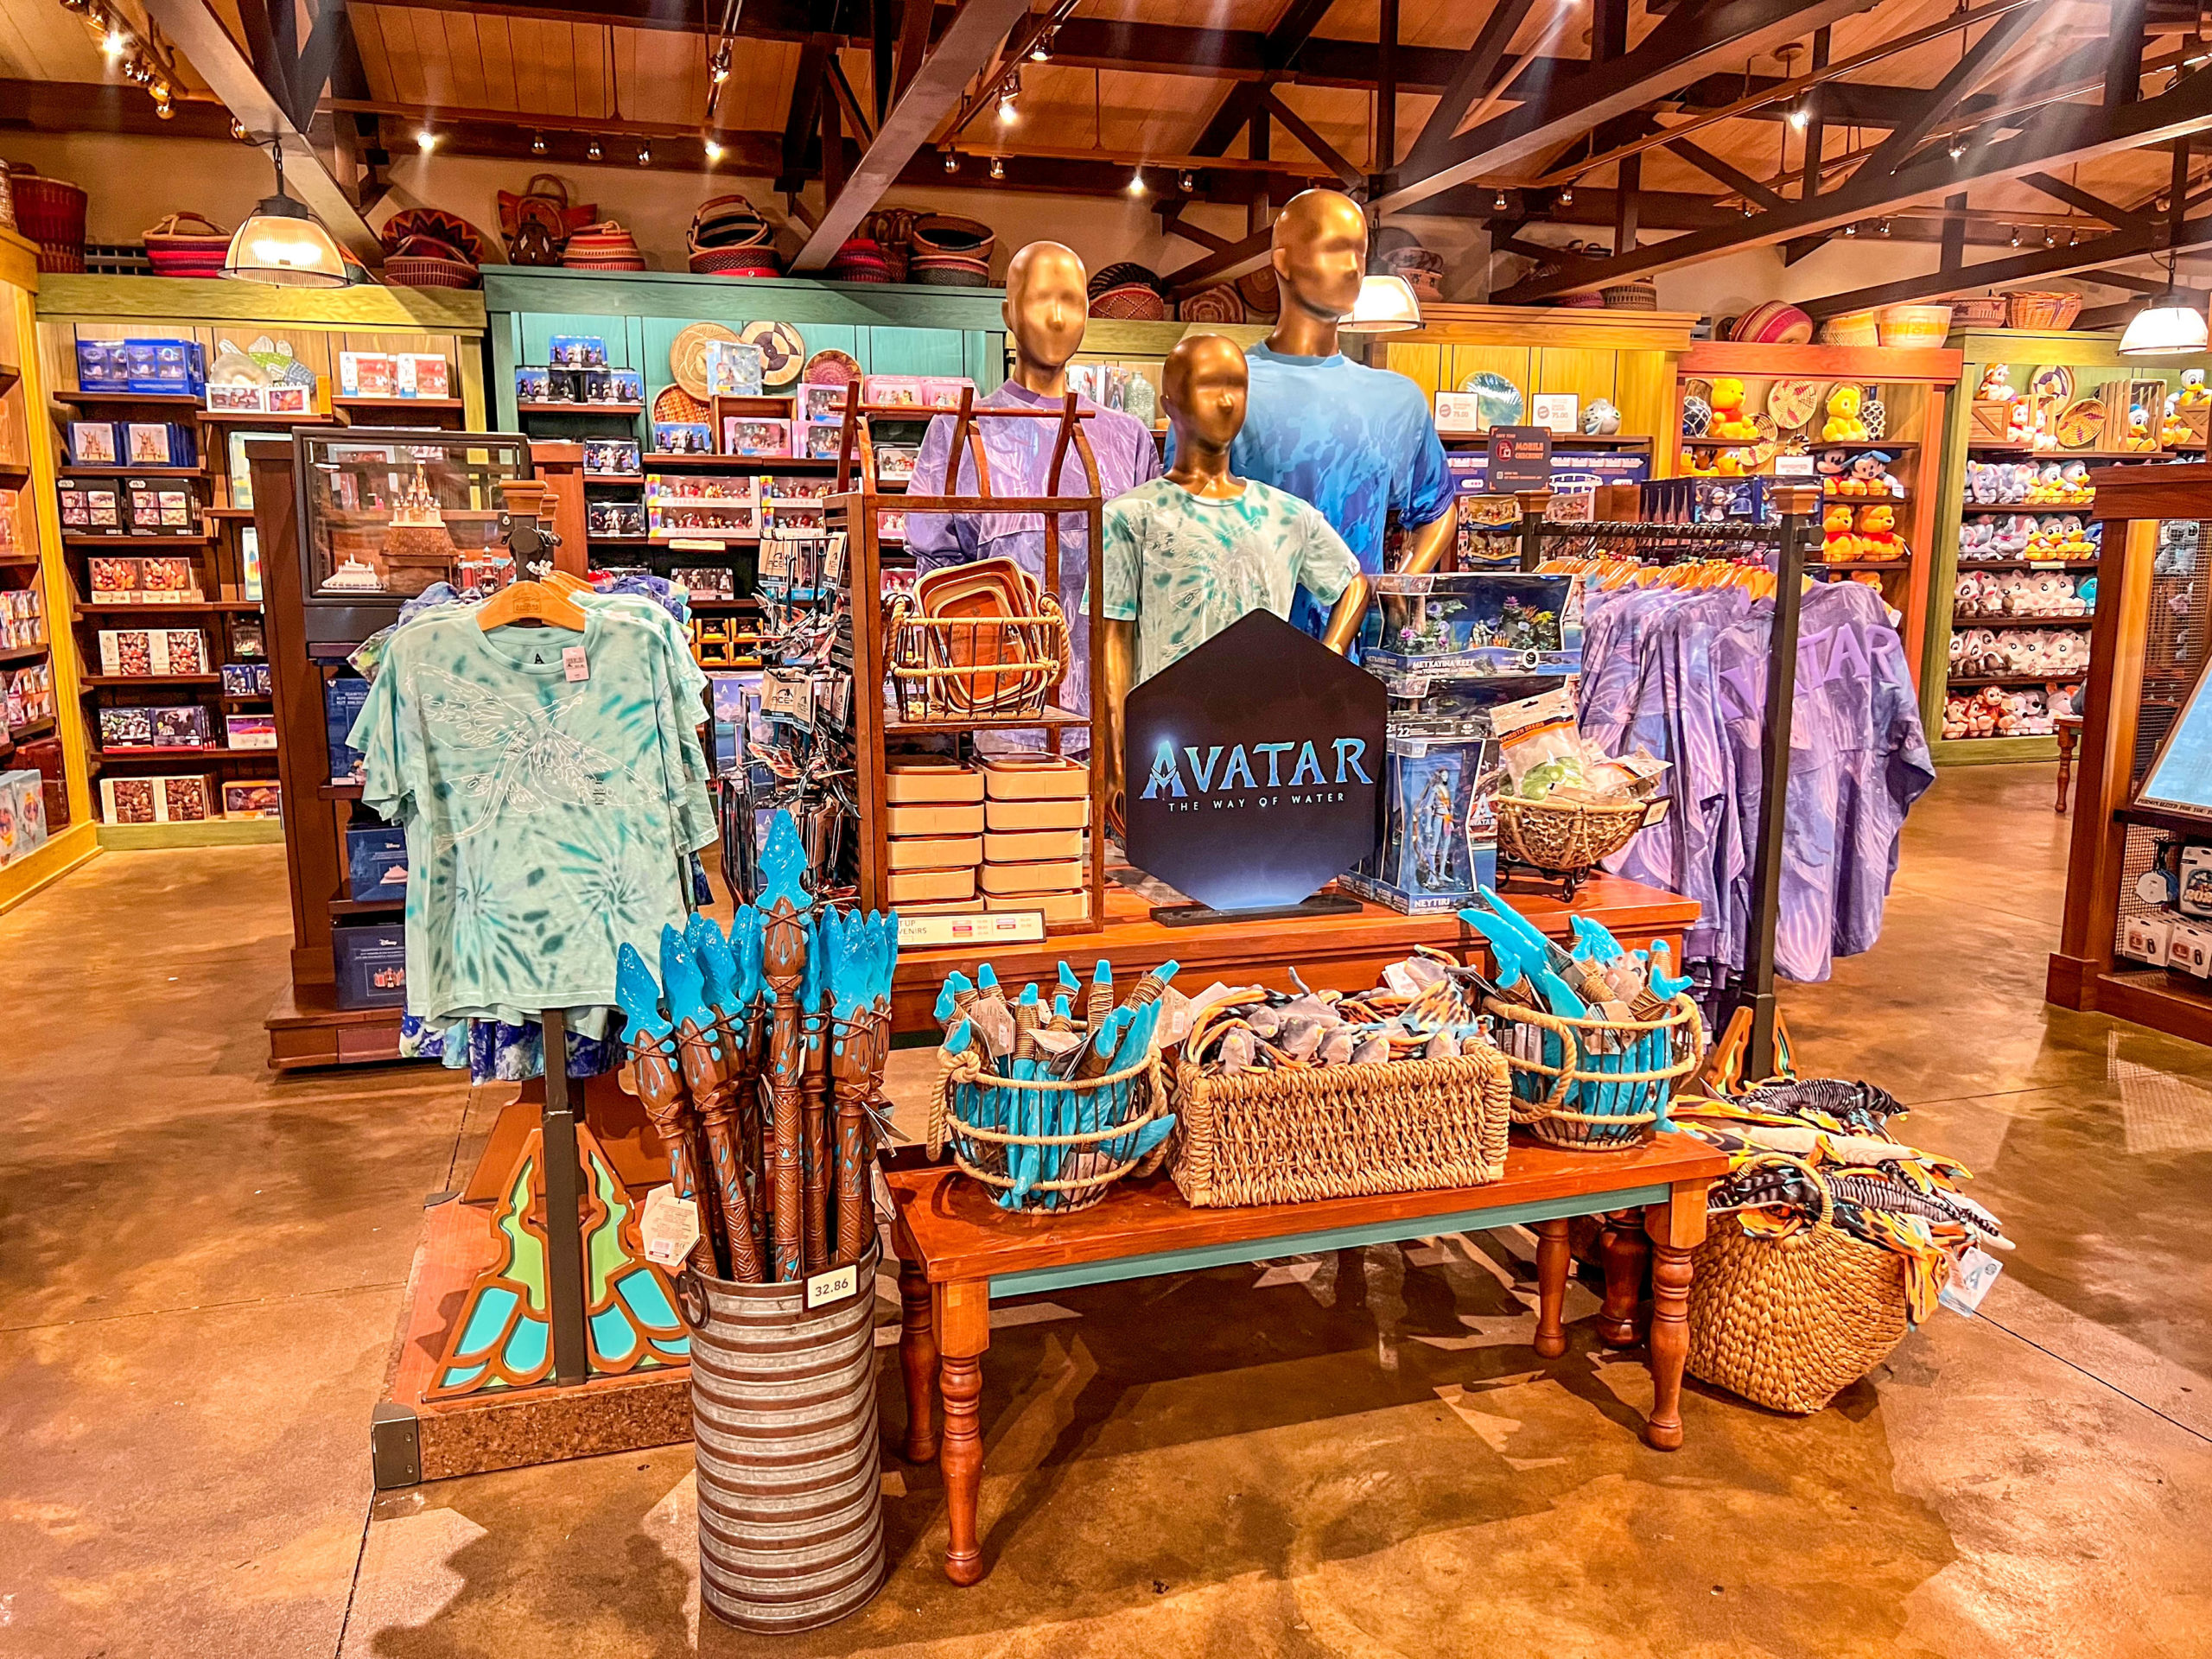 Avatar 2' Merchandise Makes a Splash at Disney's Animal Kingdom -  